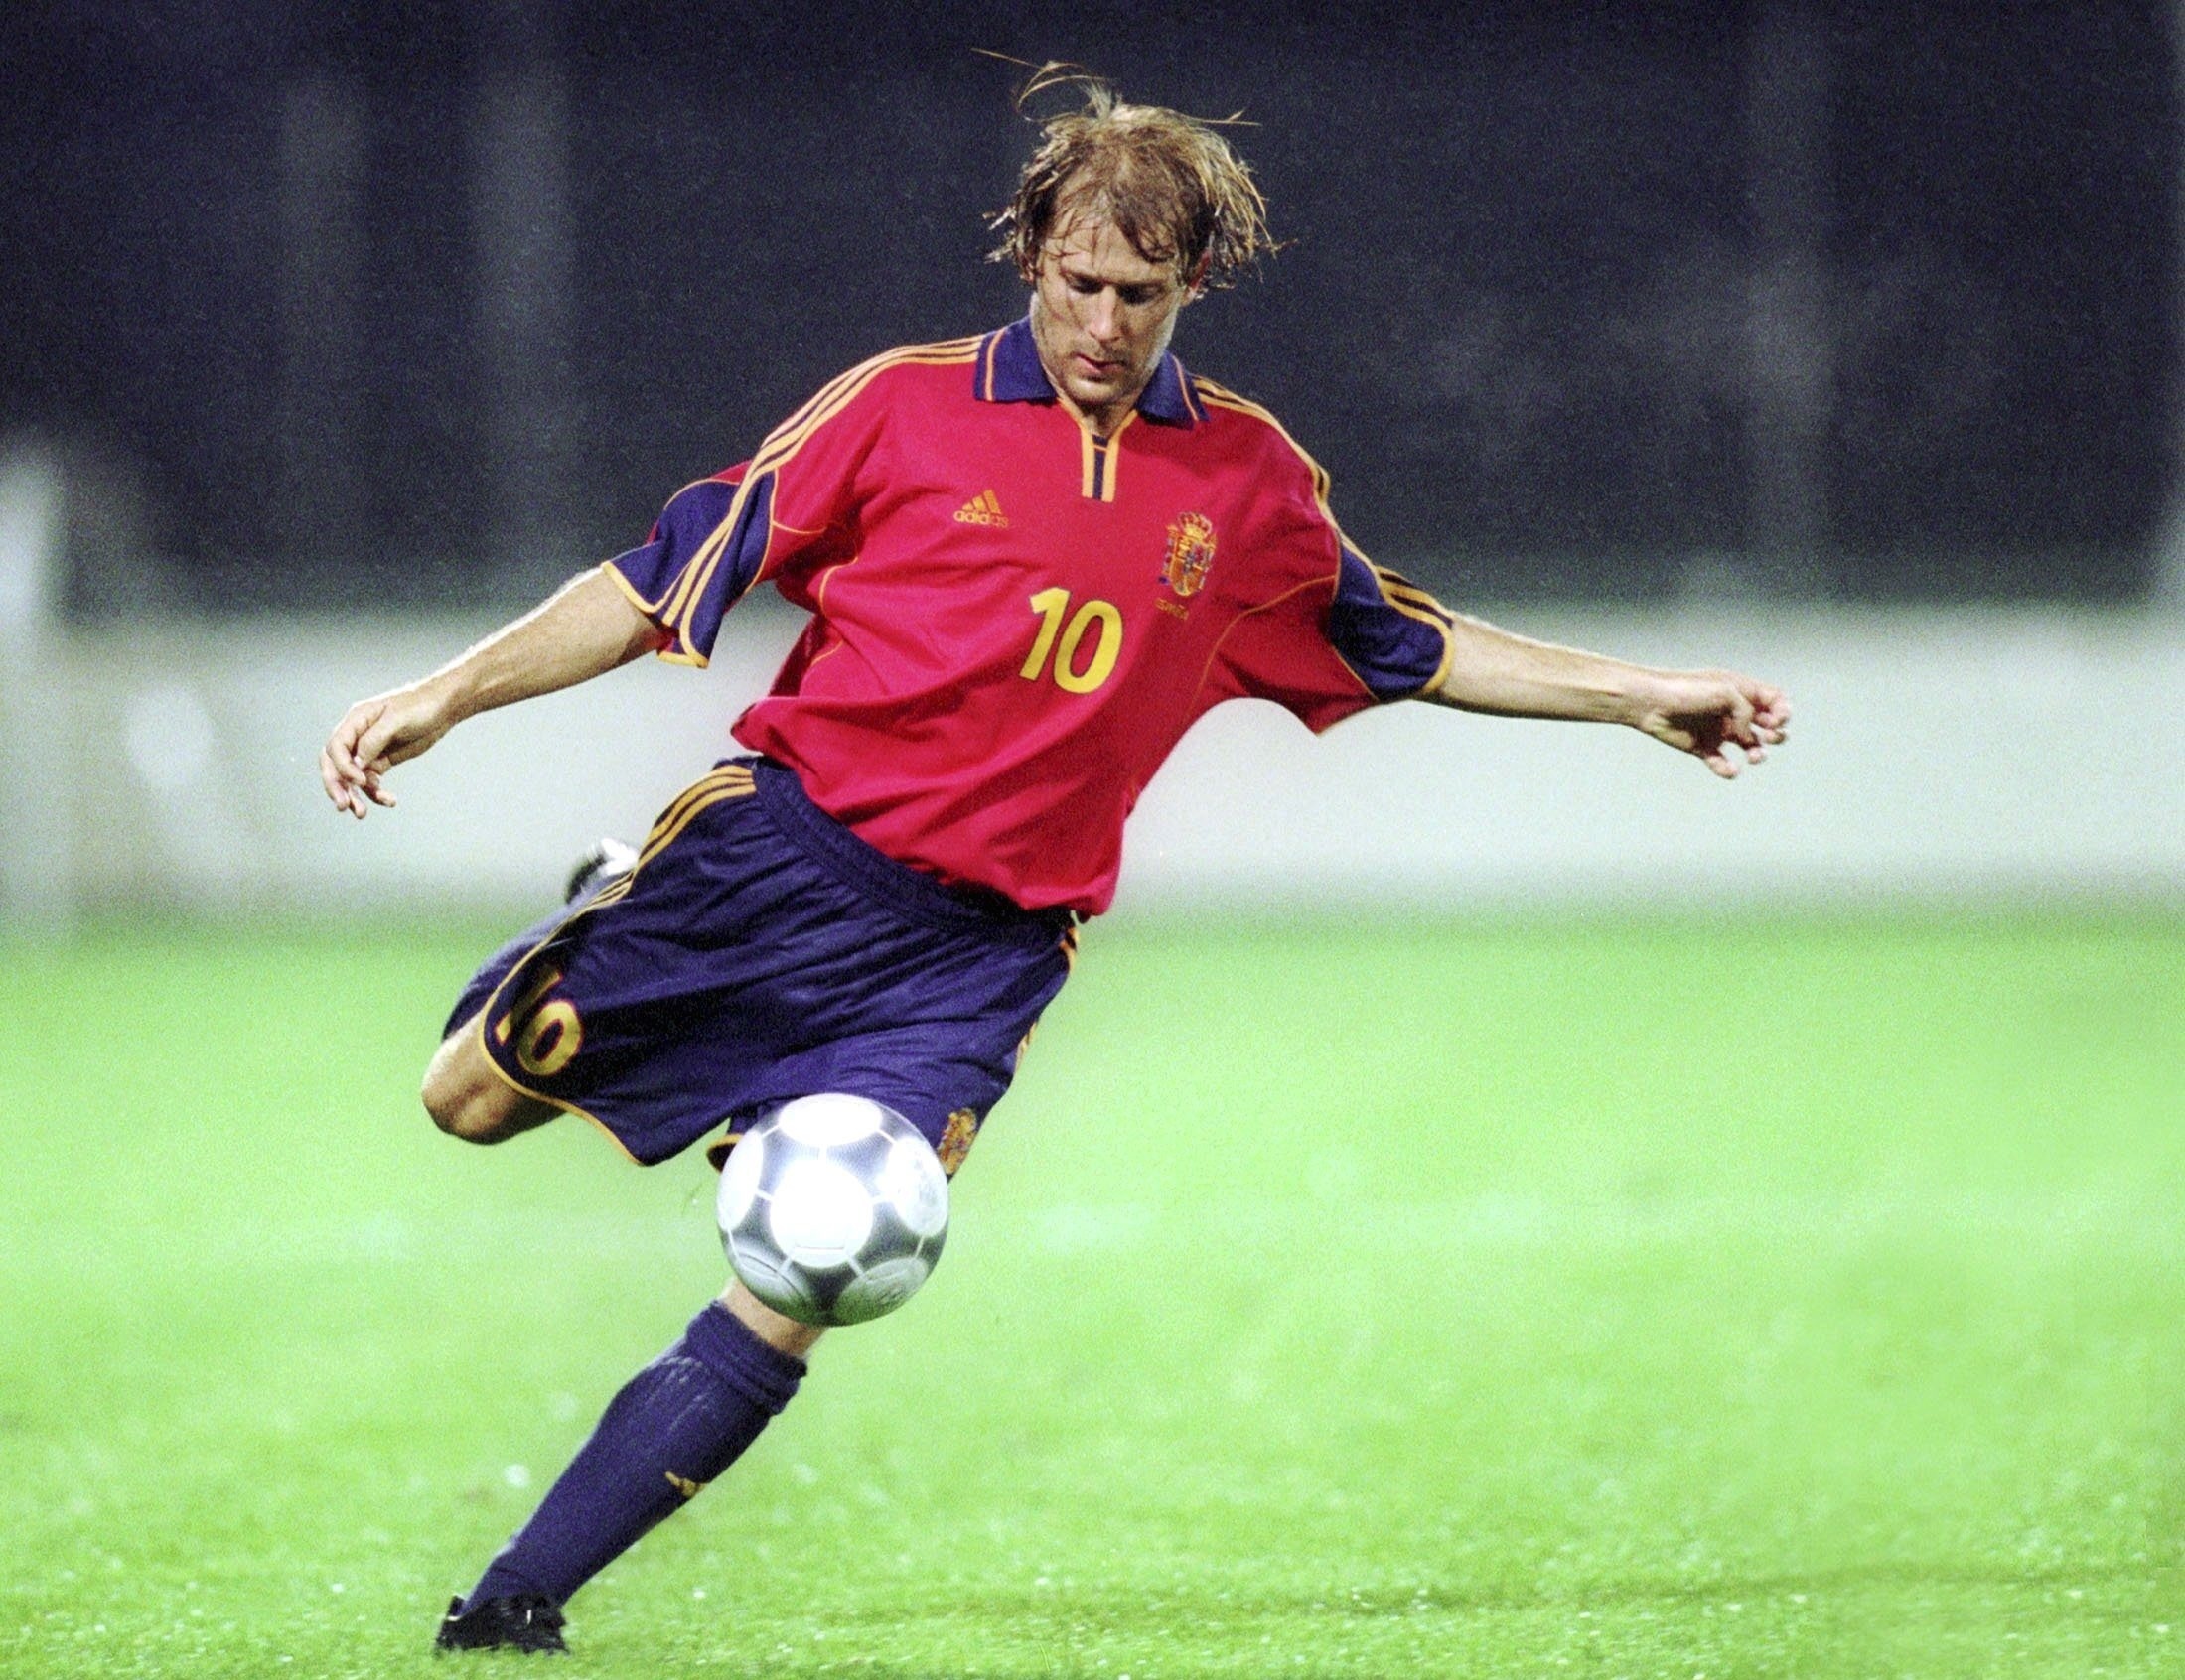 Gaizka Mendieta in action for Spain against Liechtenstein in September 2001.